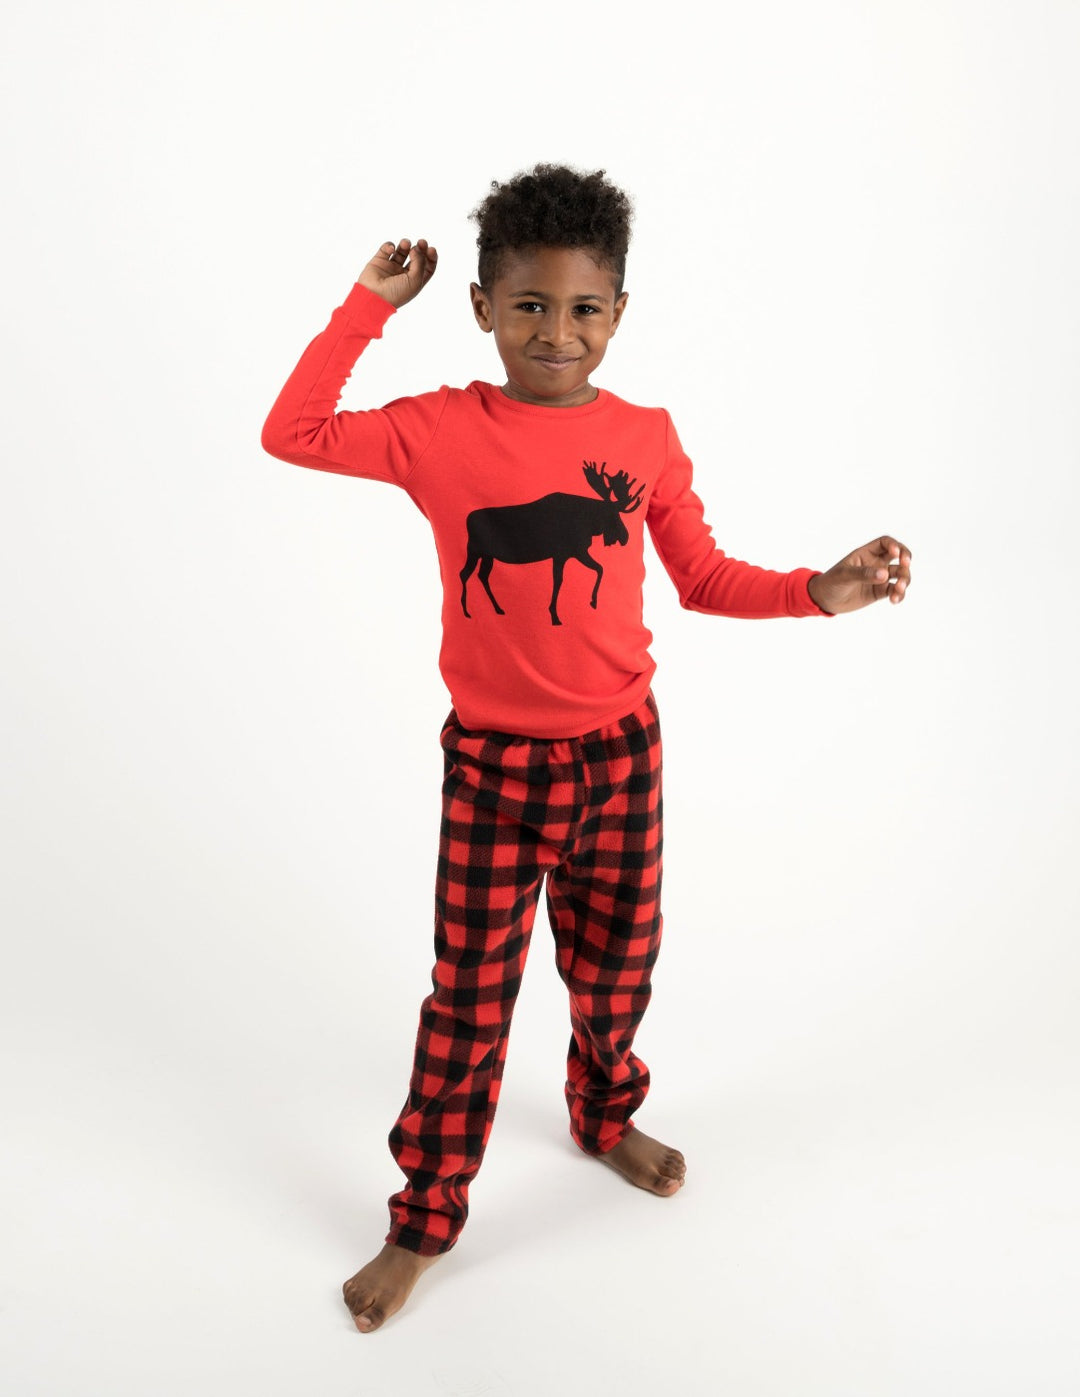 red and black plaid and moose fleece cotton kids pajama